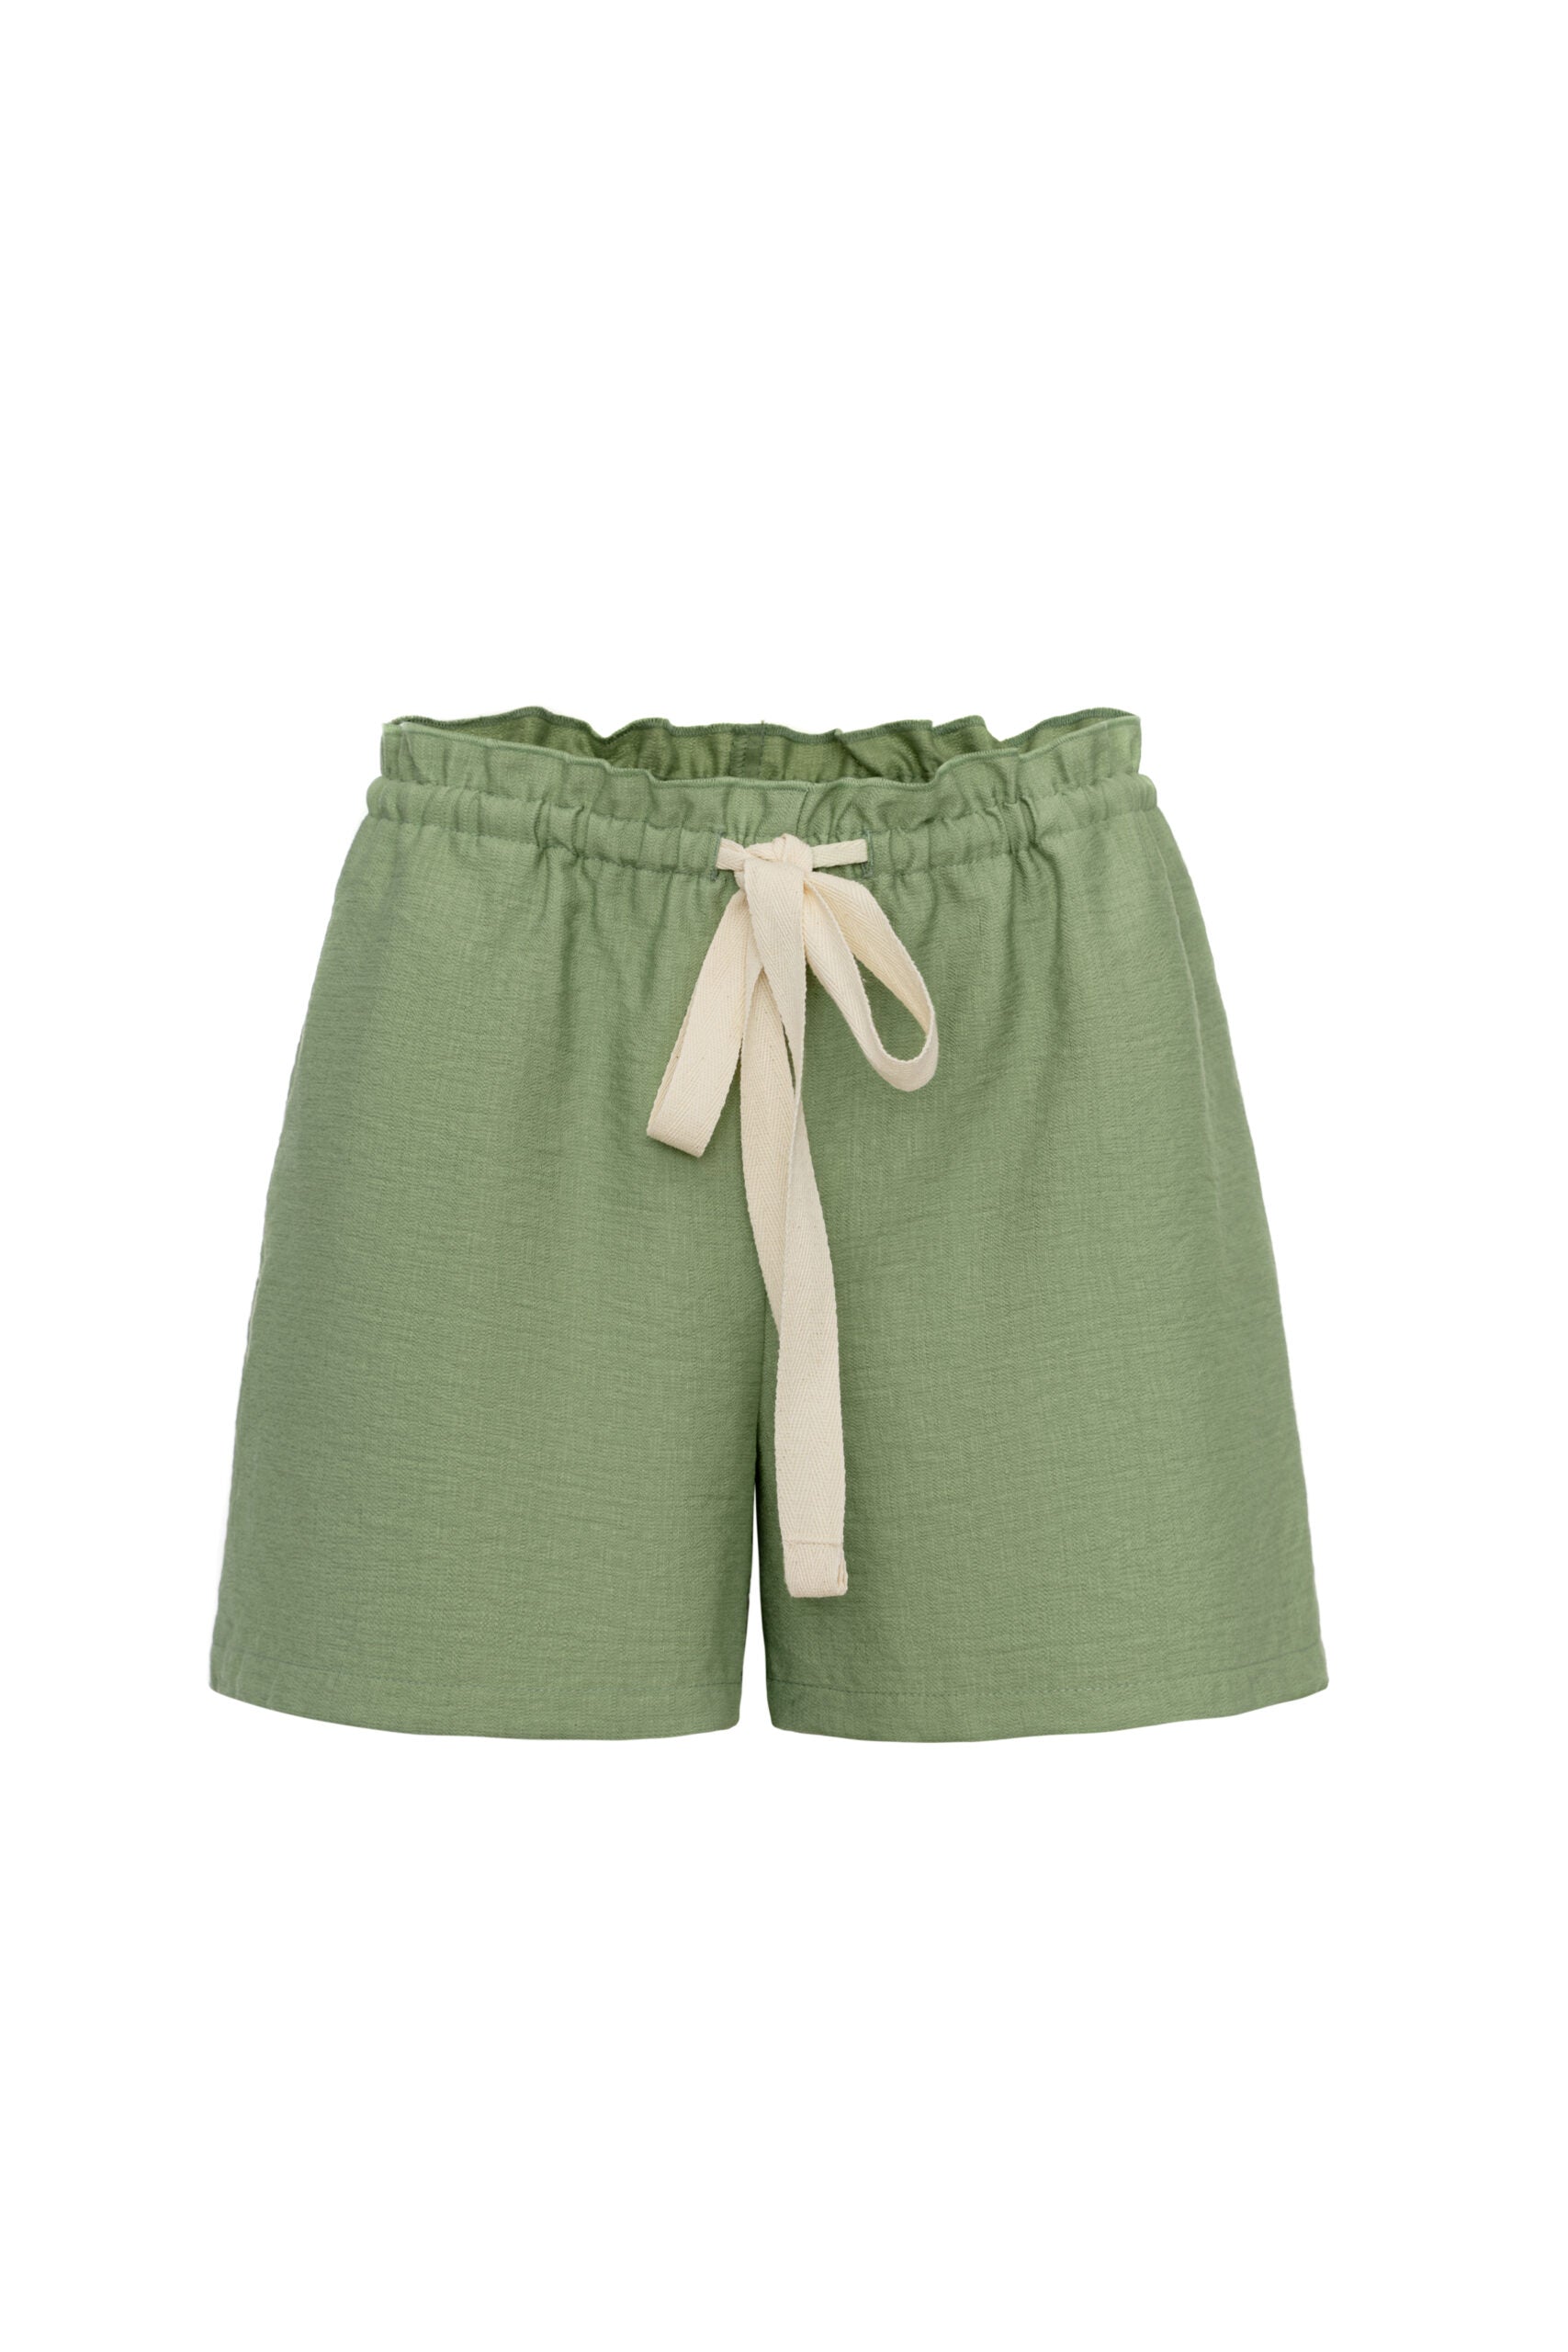 "Yana" Olive Crushed Linen Shorts